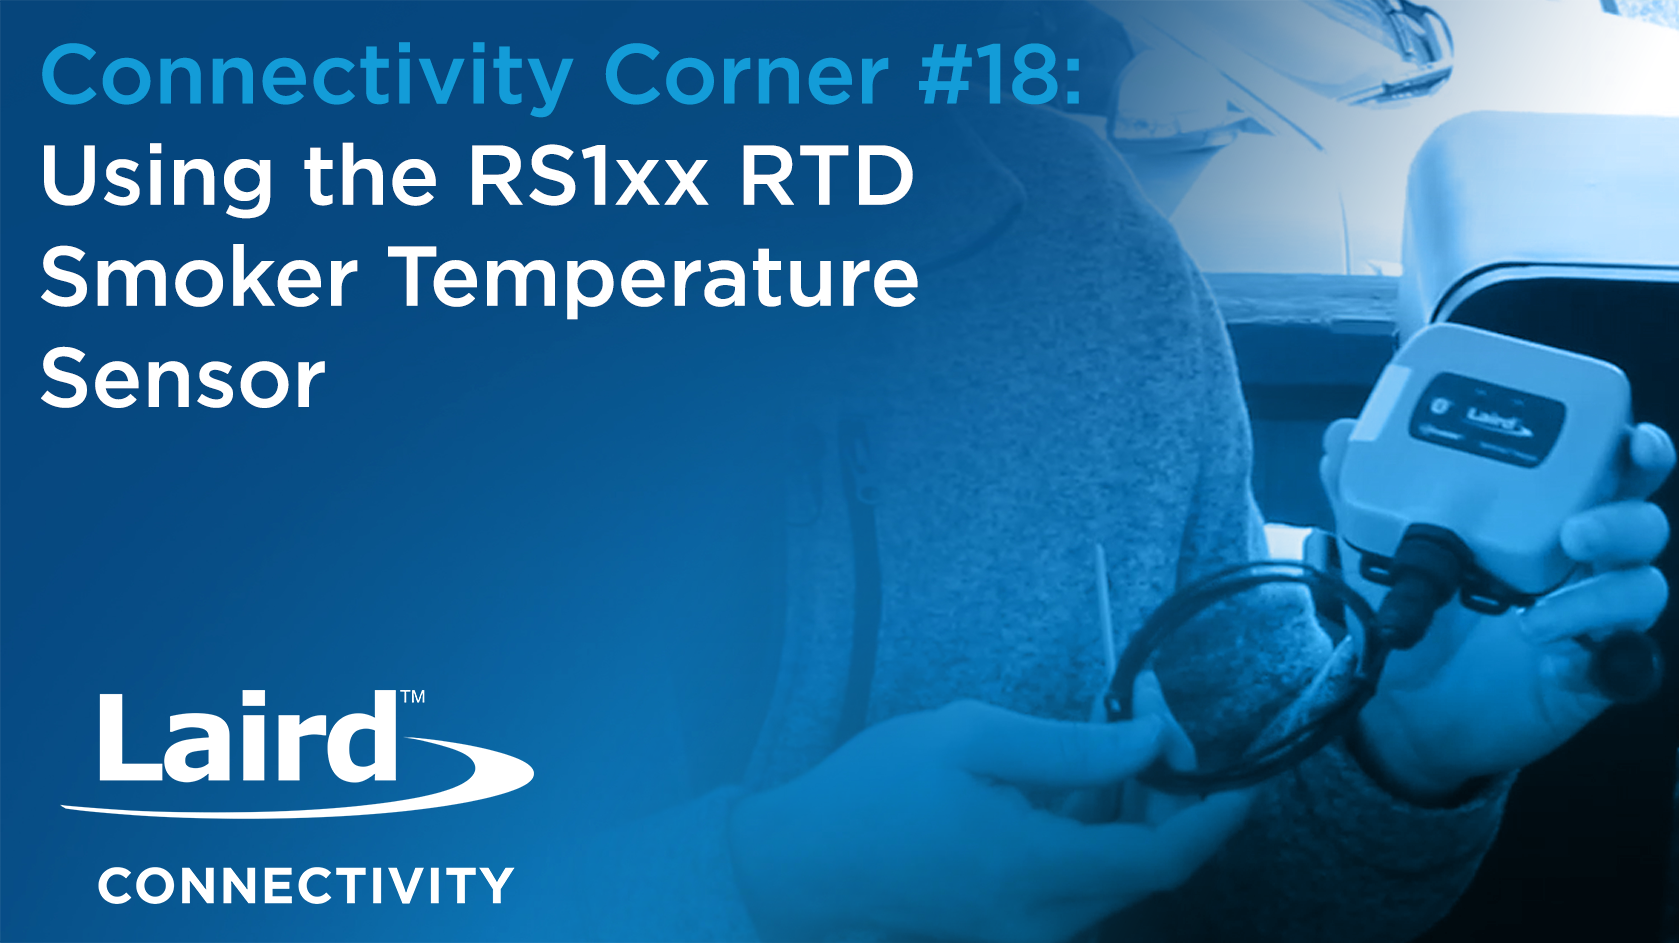 Episode 18: Using the RS1xx RTD Smoker Temperature Sensor